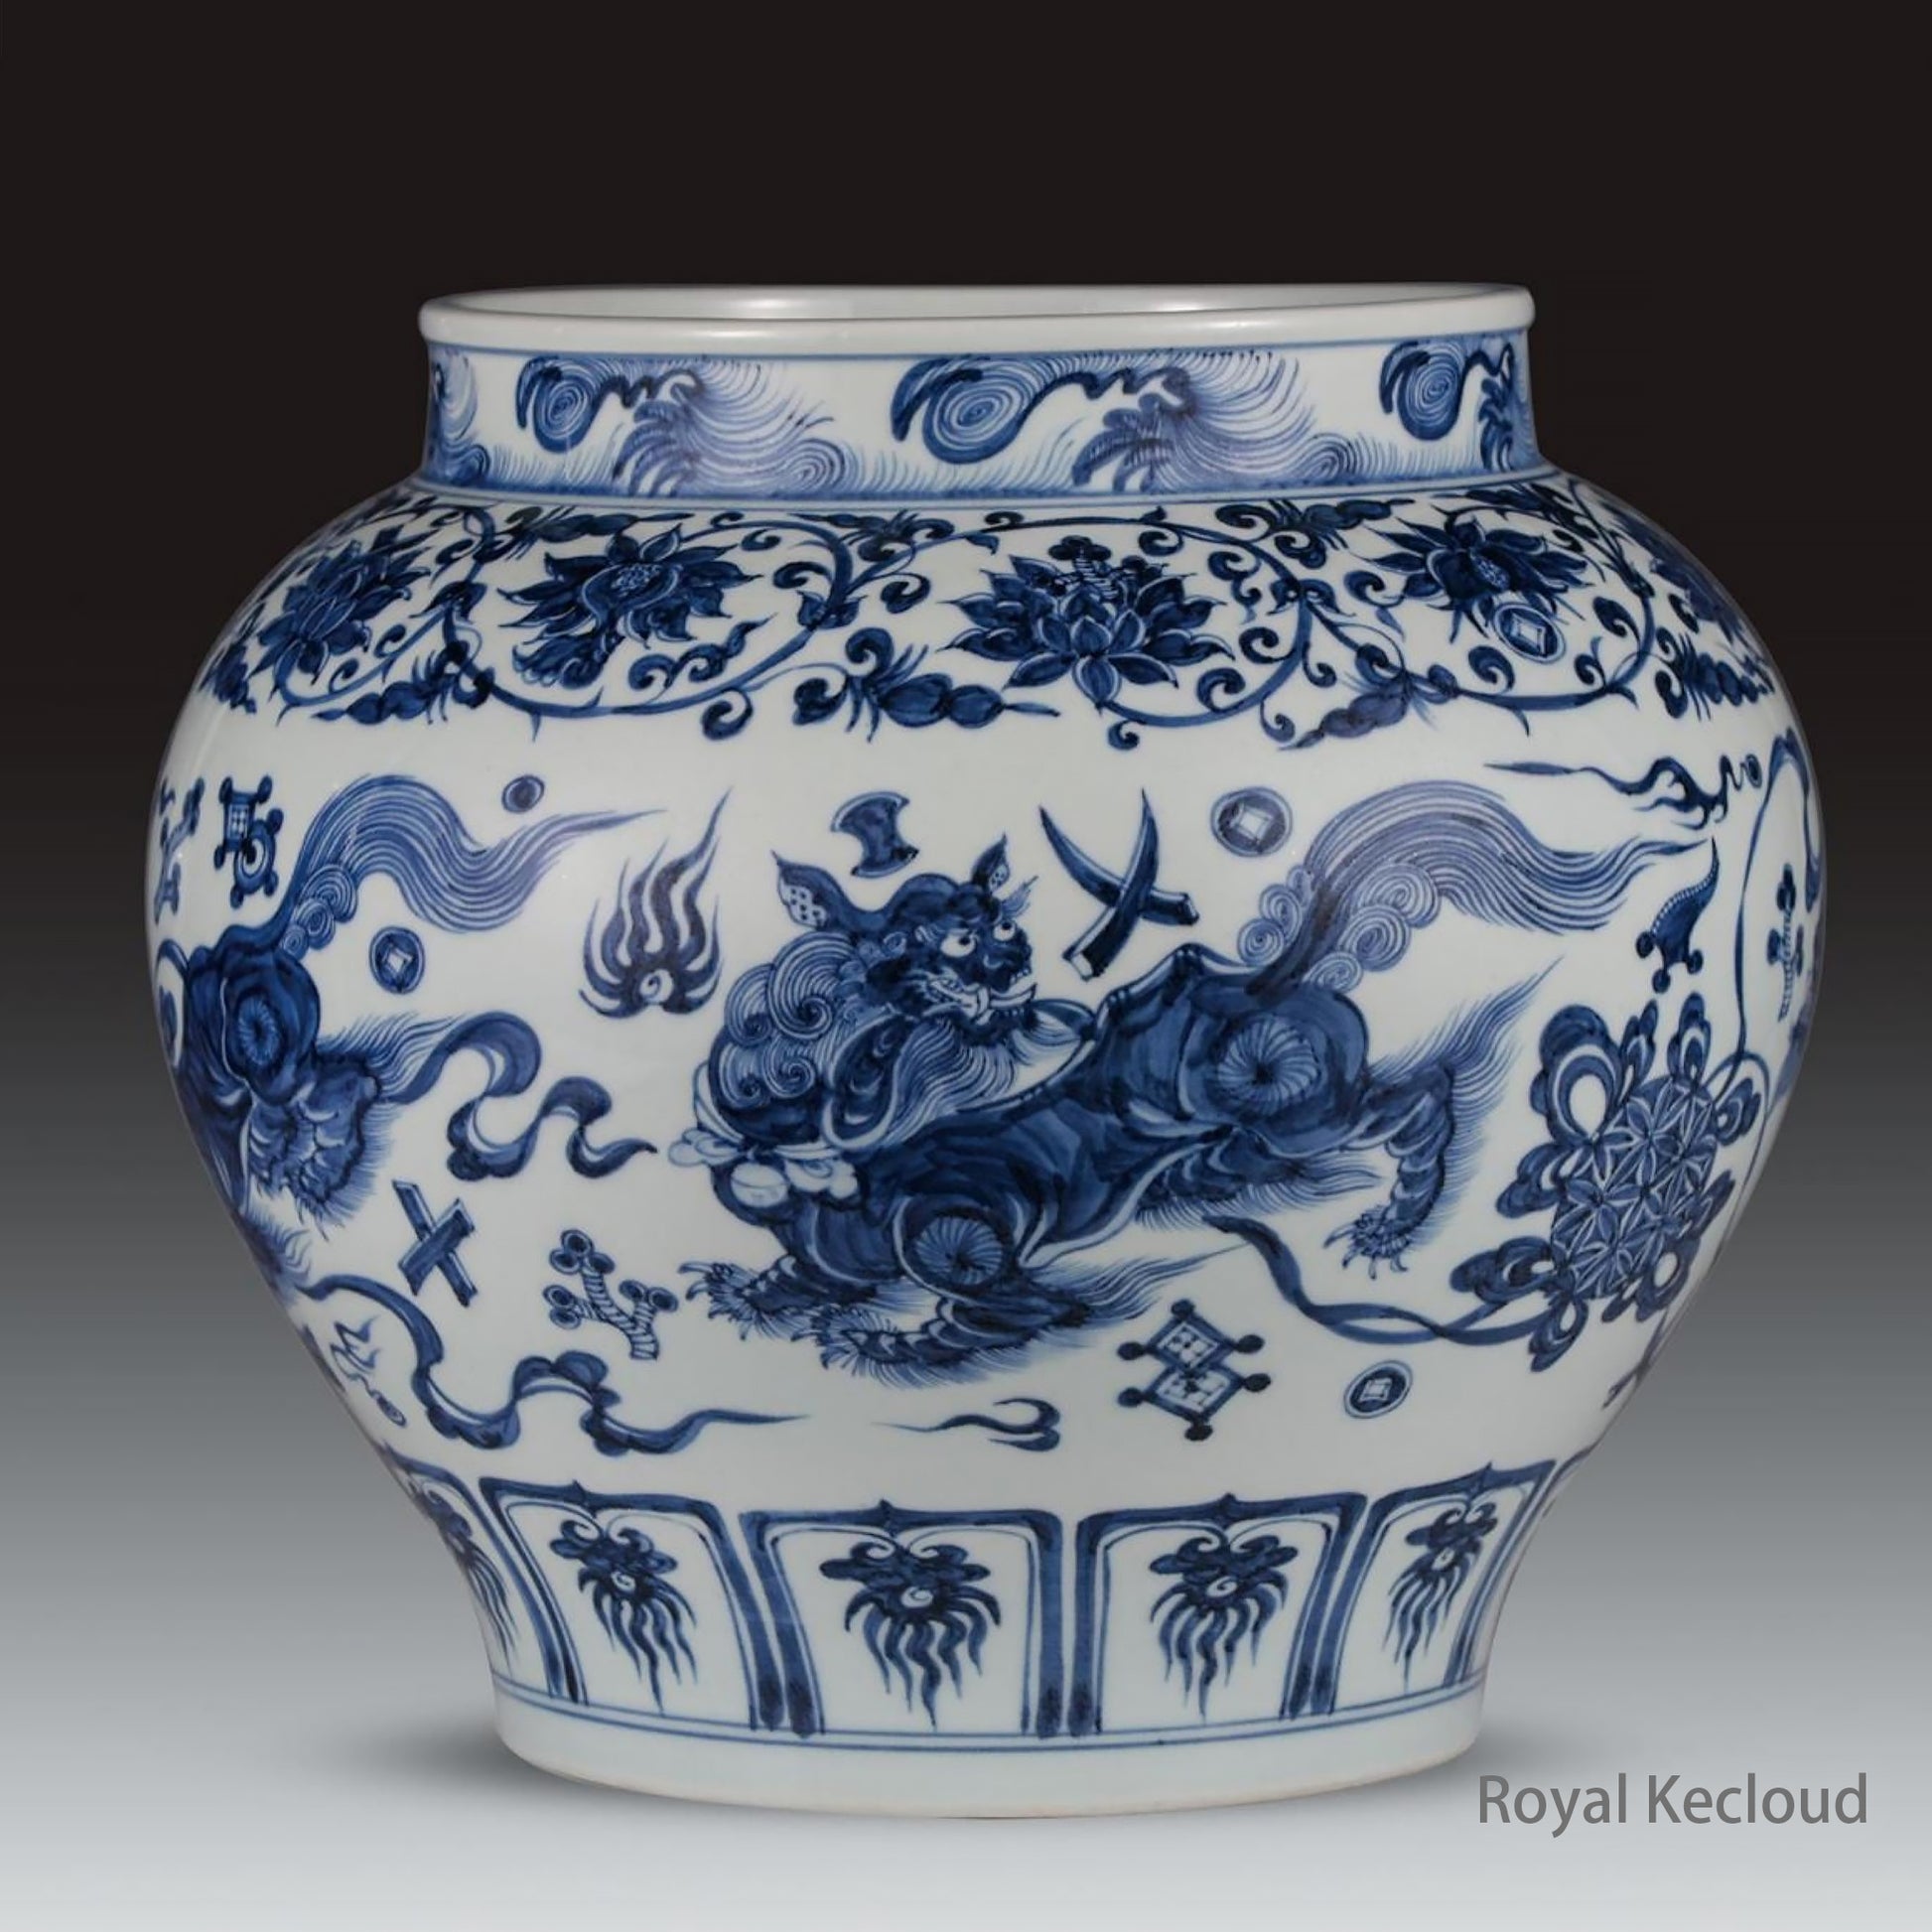 An Exceptionnally Rare Shi Zi Xiu Qiu and Flower' Blue and White Jar, Yuan Dynasty